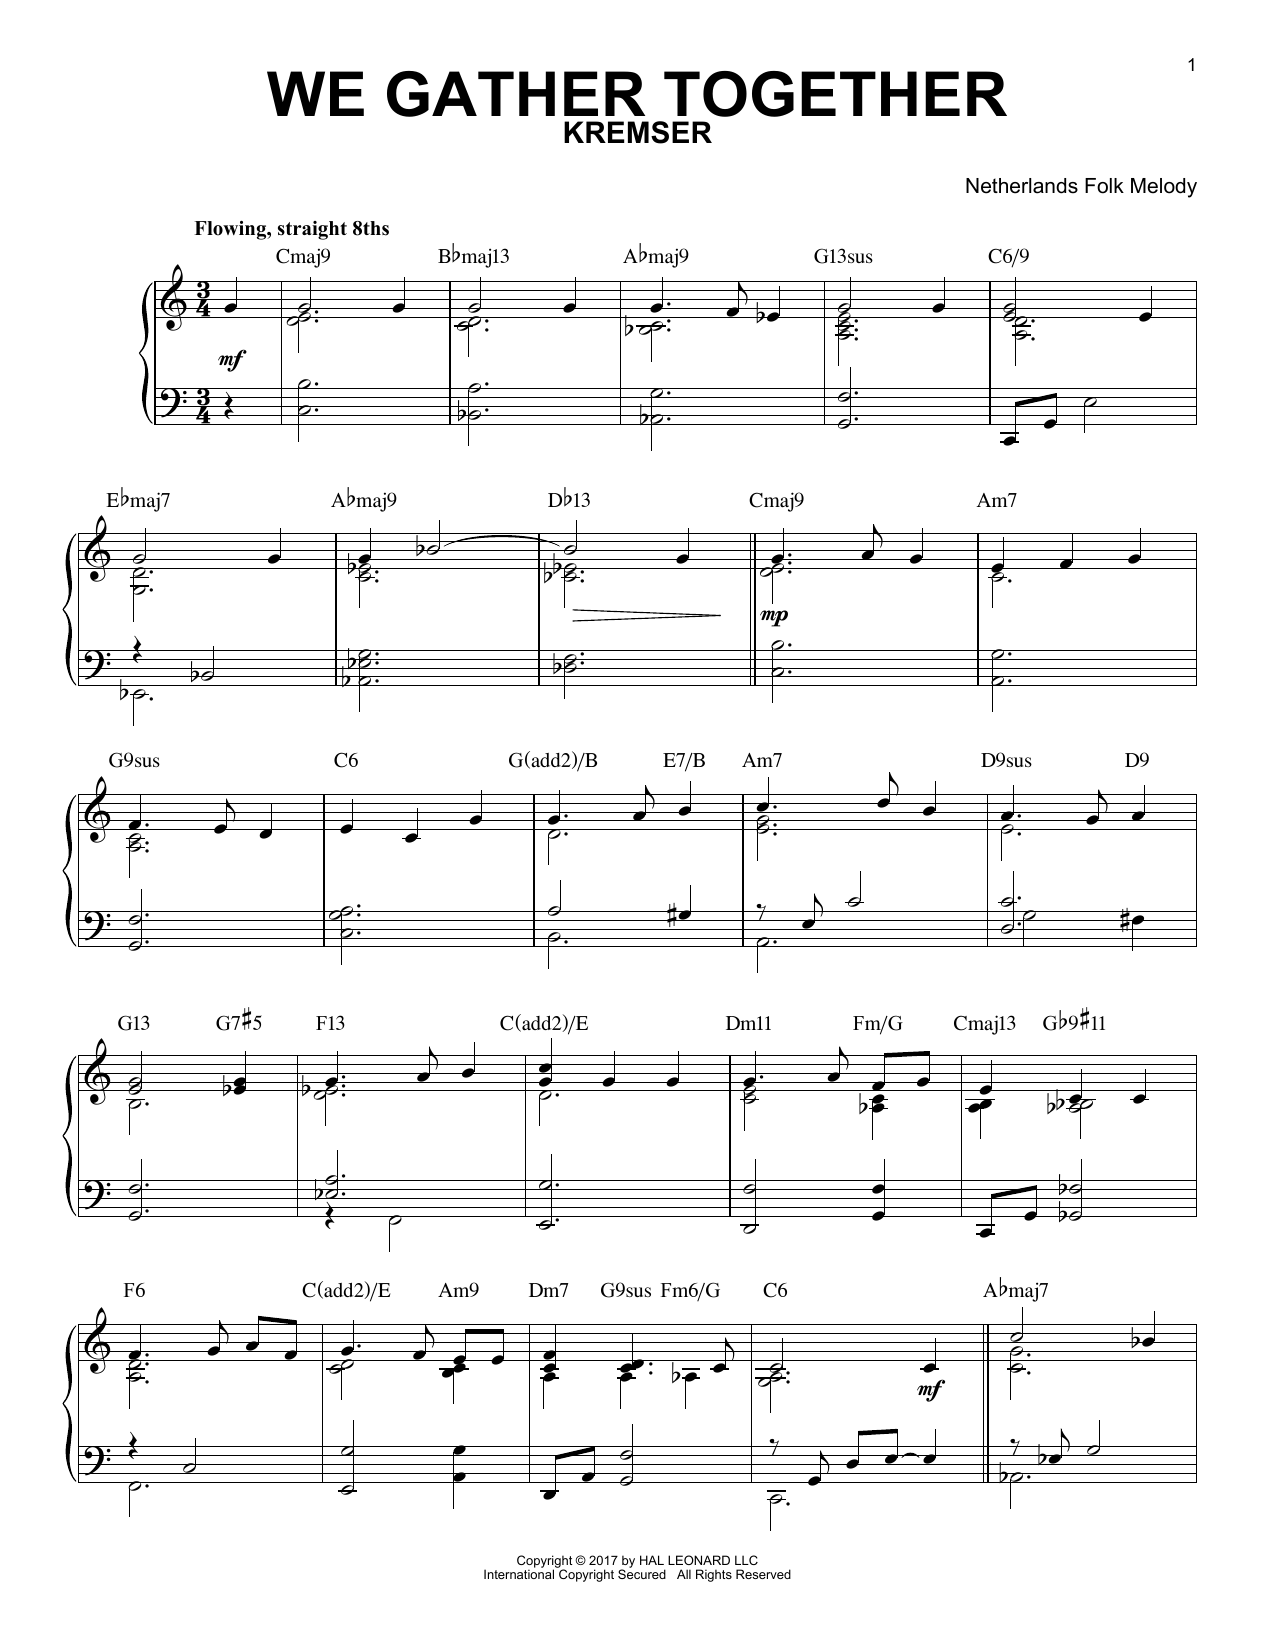 Edward Kremser We Gather Together [Jazz version] Sheet Music Notes & Chords for Piano - Download or Print PDF